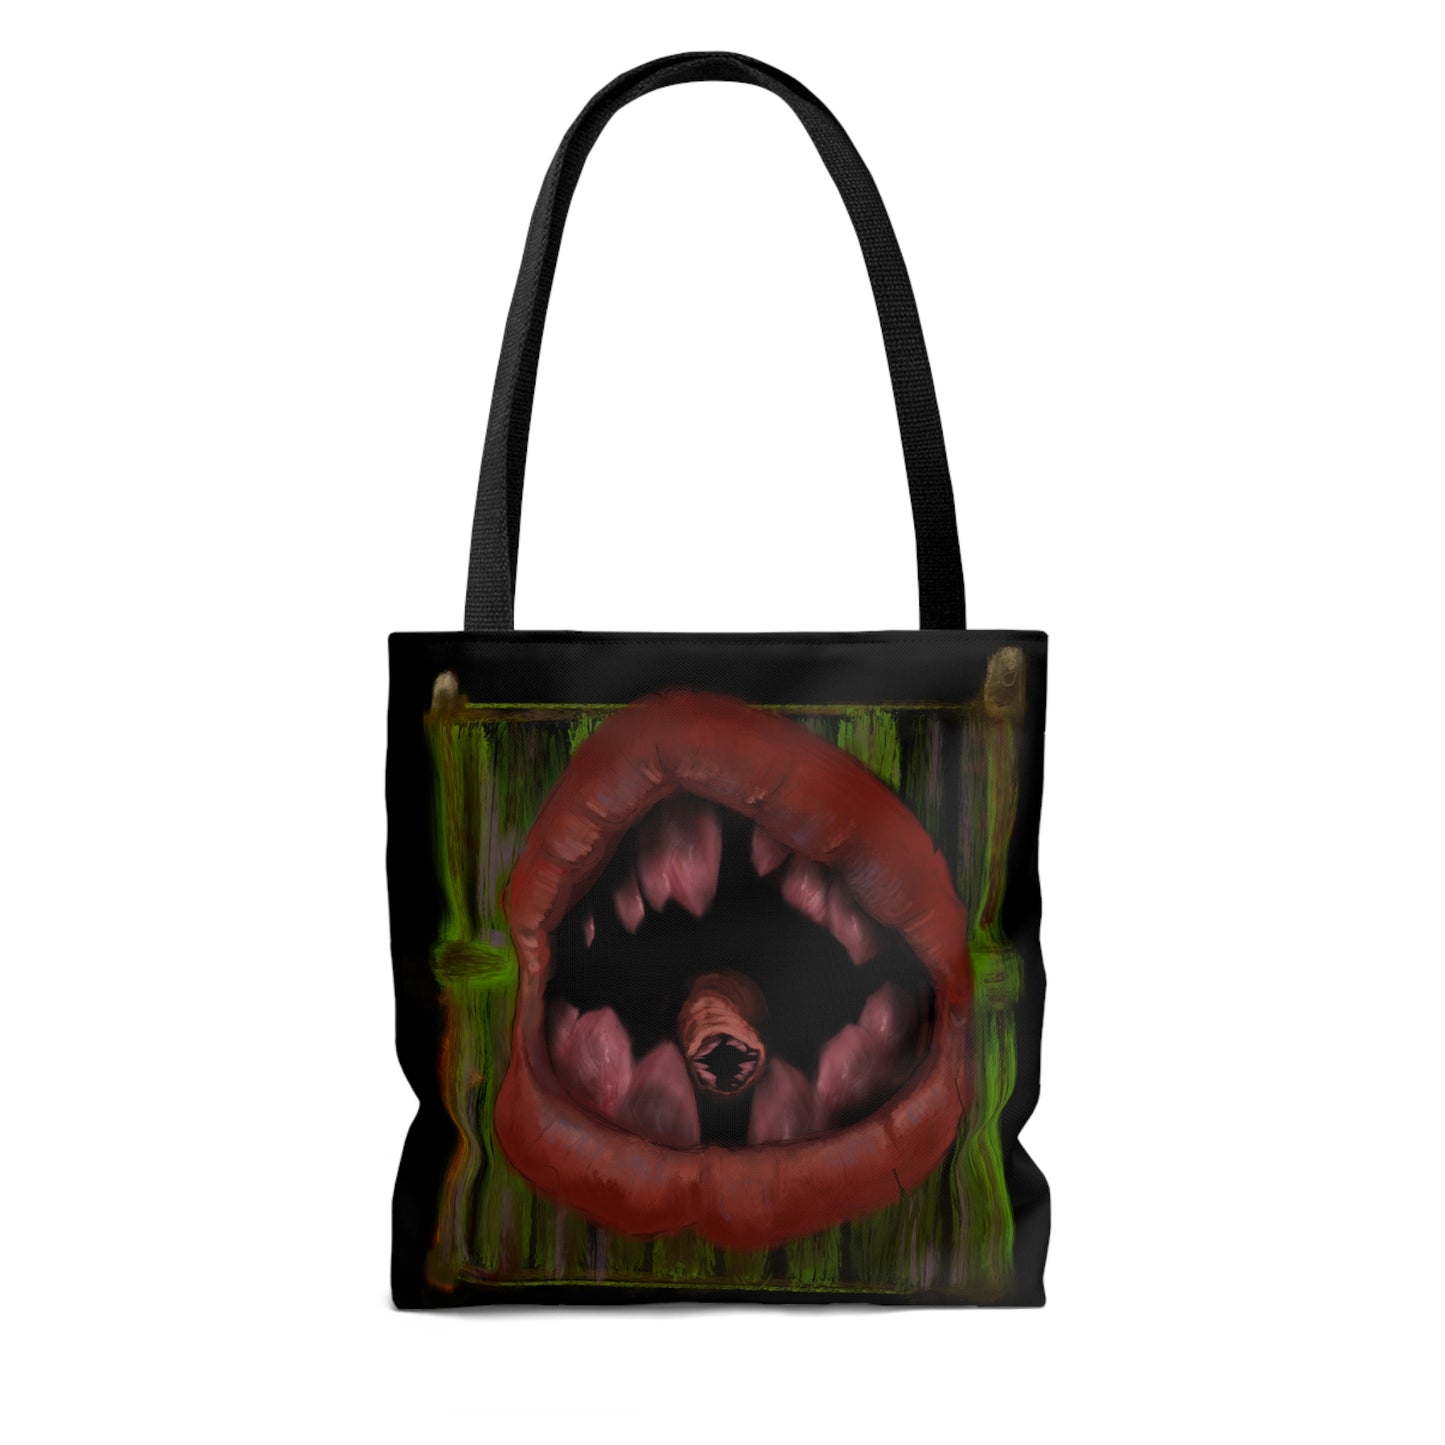 Parasite Mouth Tote Bag